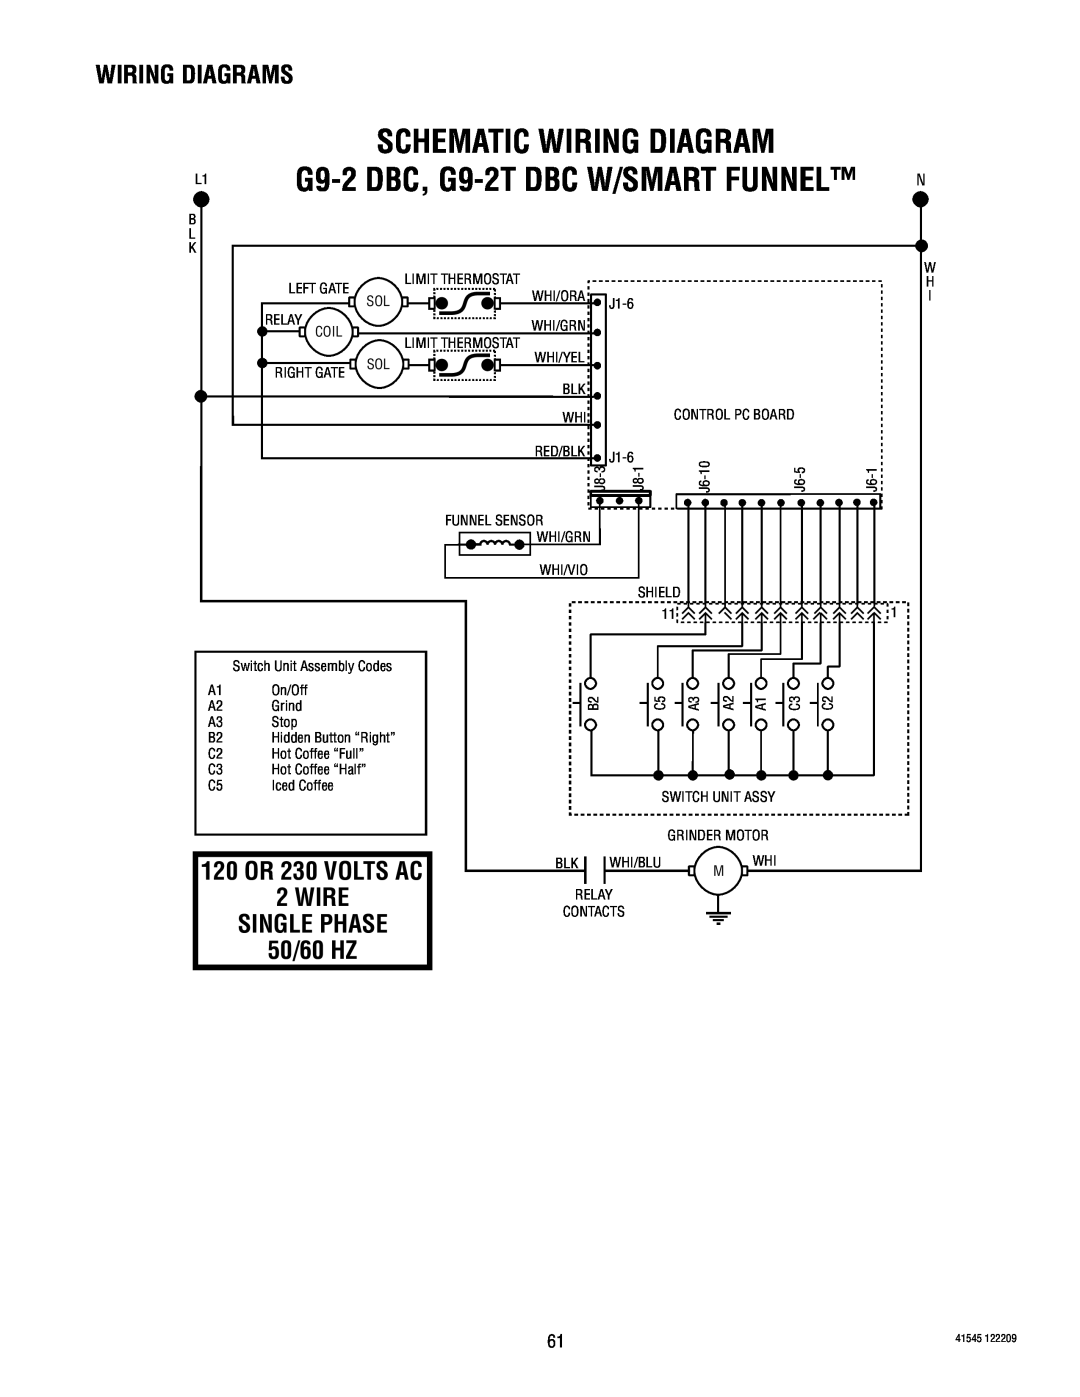 Bunn FPG, LPG-2 Schematic Wiring Diagram, G9-2 DBC, G9-2T DBC W/SMART FUNNEL, Wiring Diagrams, WIRE SINGLE PHASE 50/60 HZ 